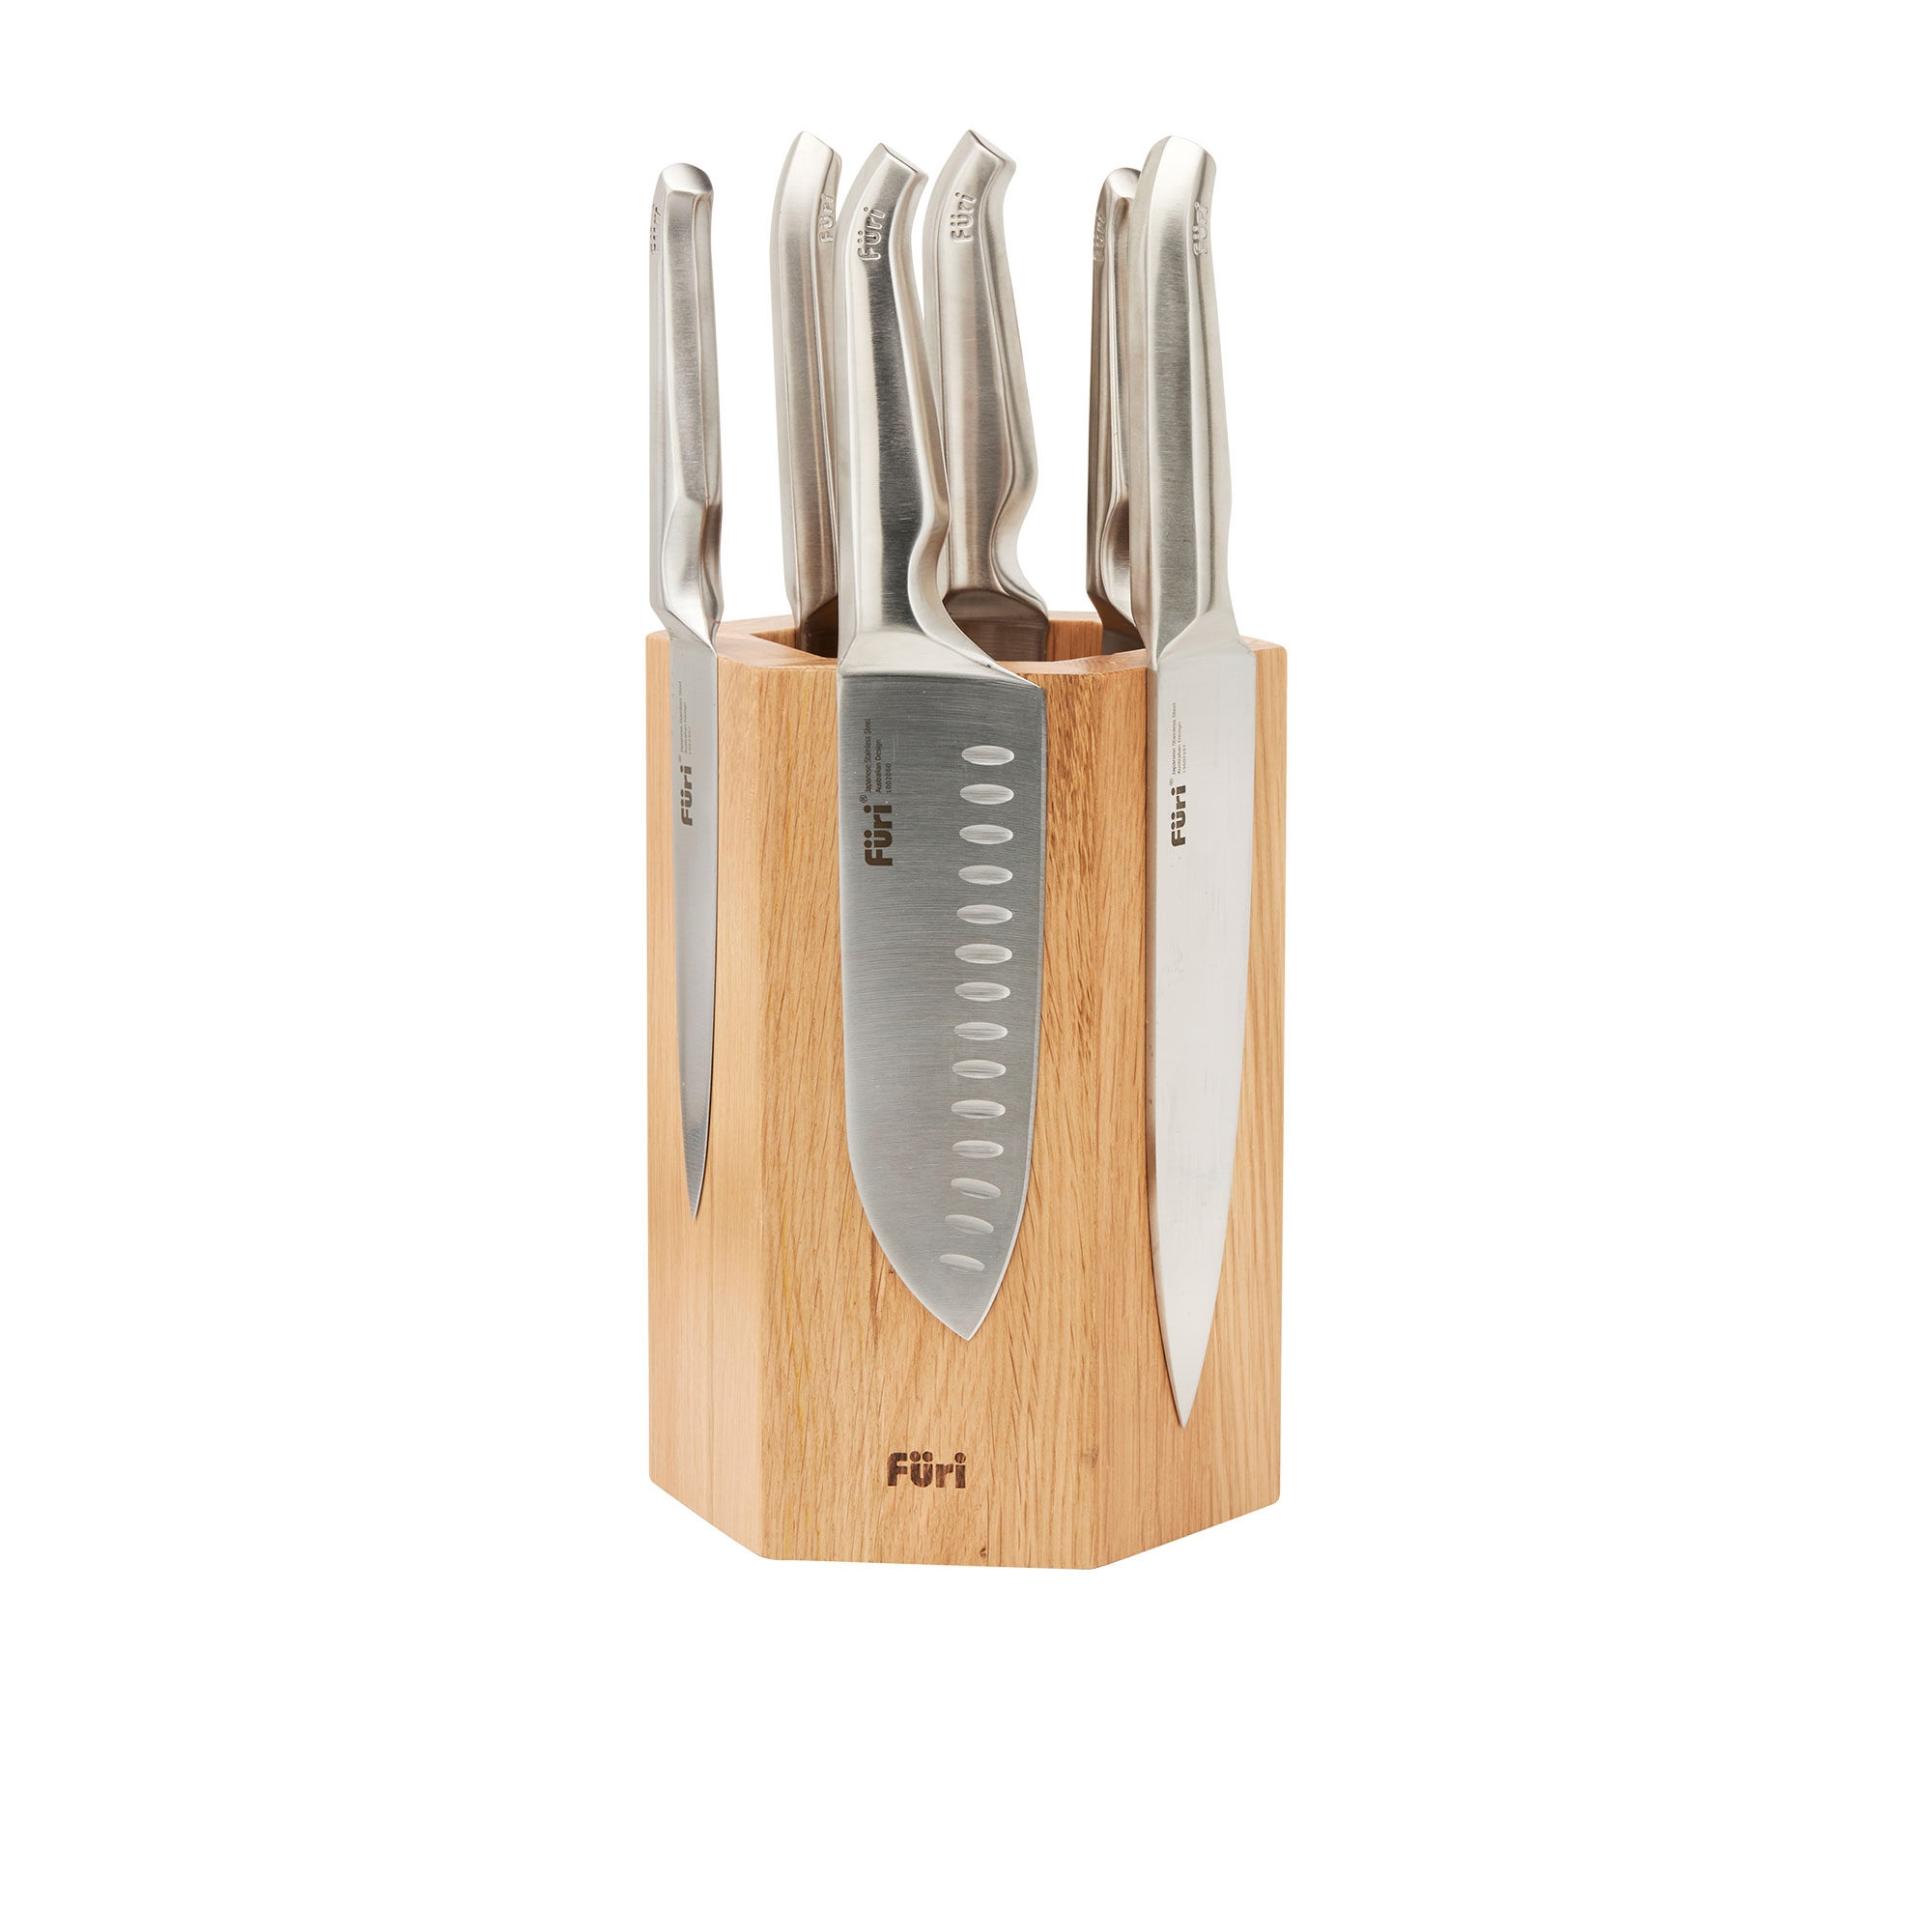 Furi Pro 7pc Hexagonal Magnetic Knife Block Set Image 1